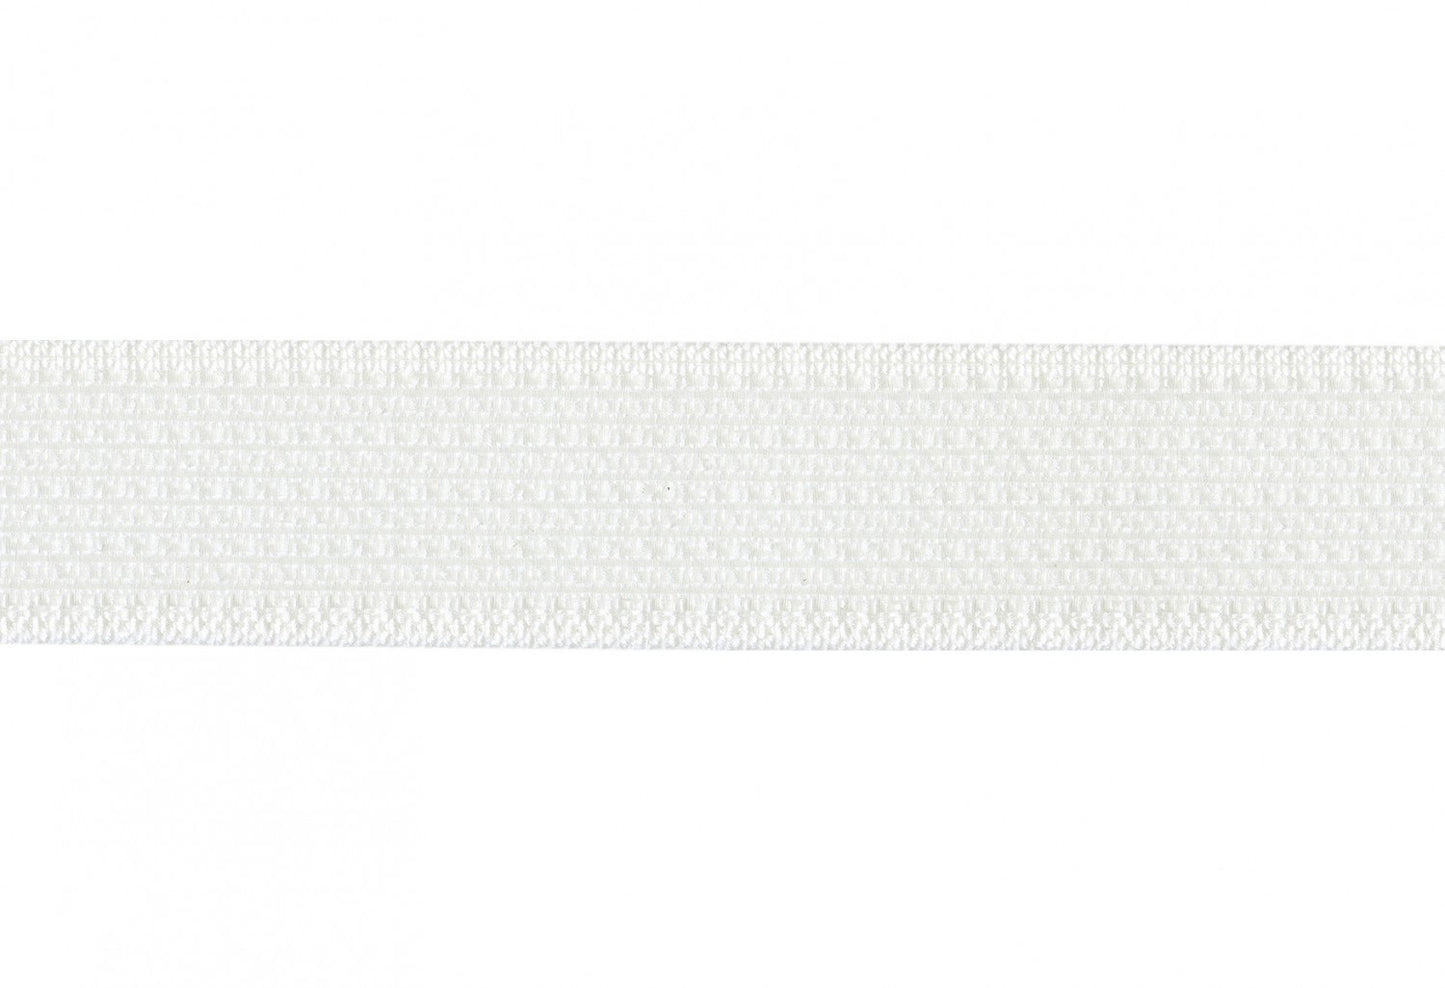 Bamboo Cotton 1x1 Rib Knit Fabric - Warm Grey